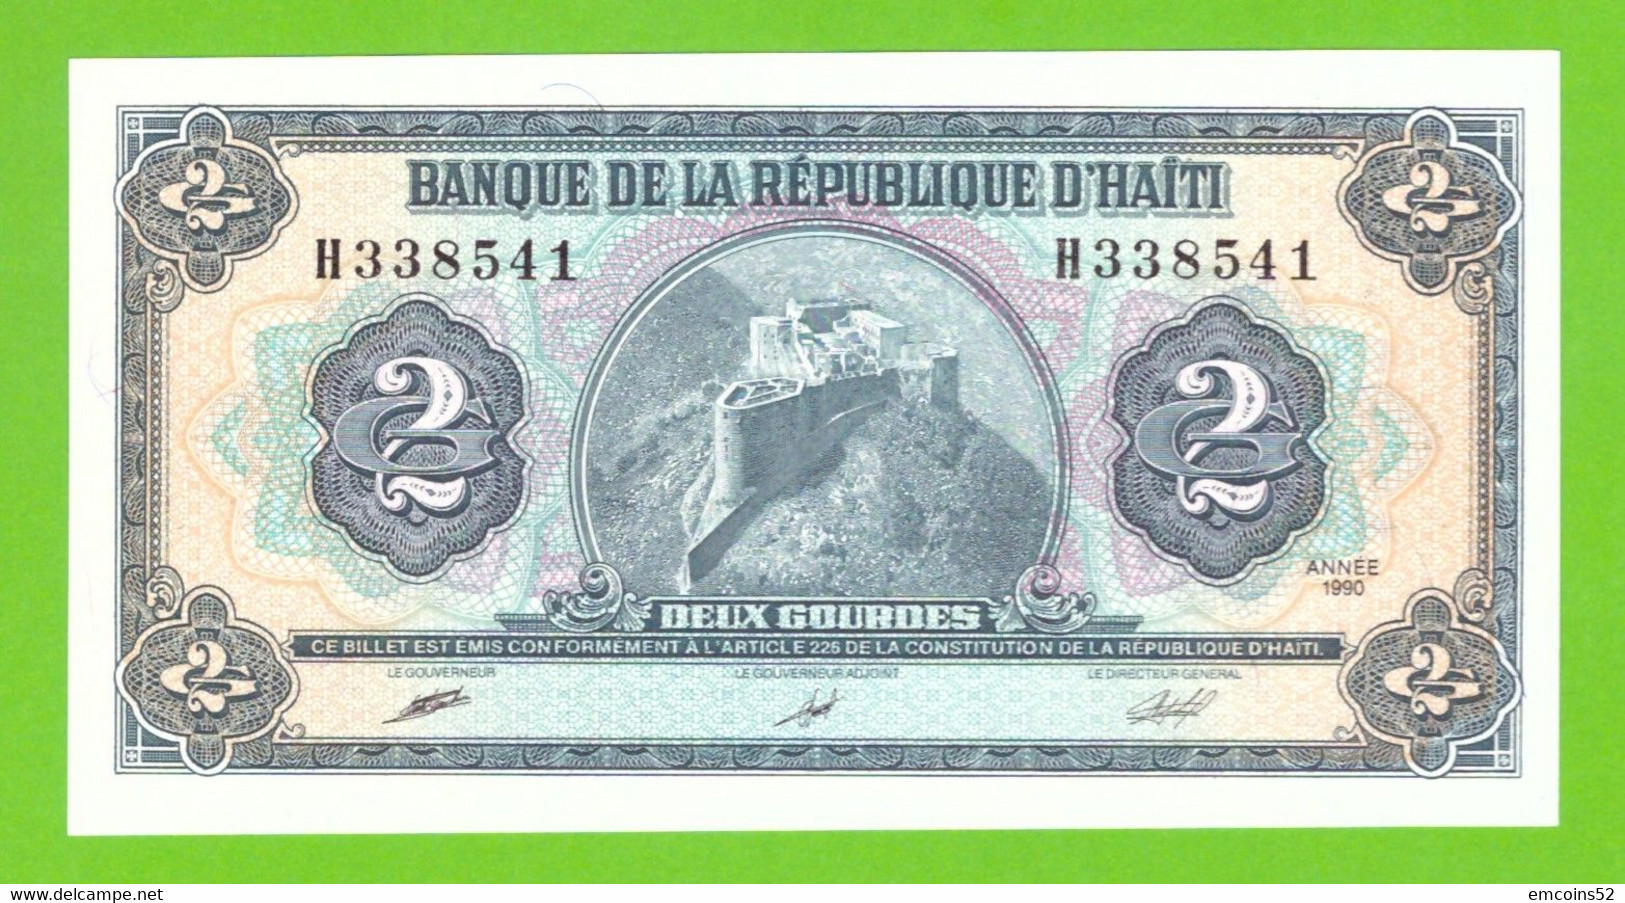 HAITI 2 GOURDES 1990  P-254 UNC - Haiti